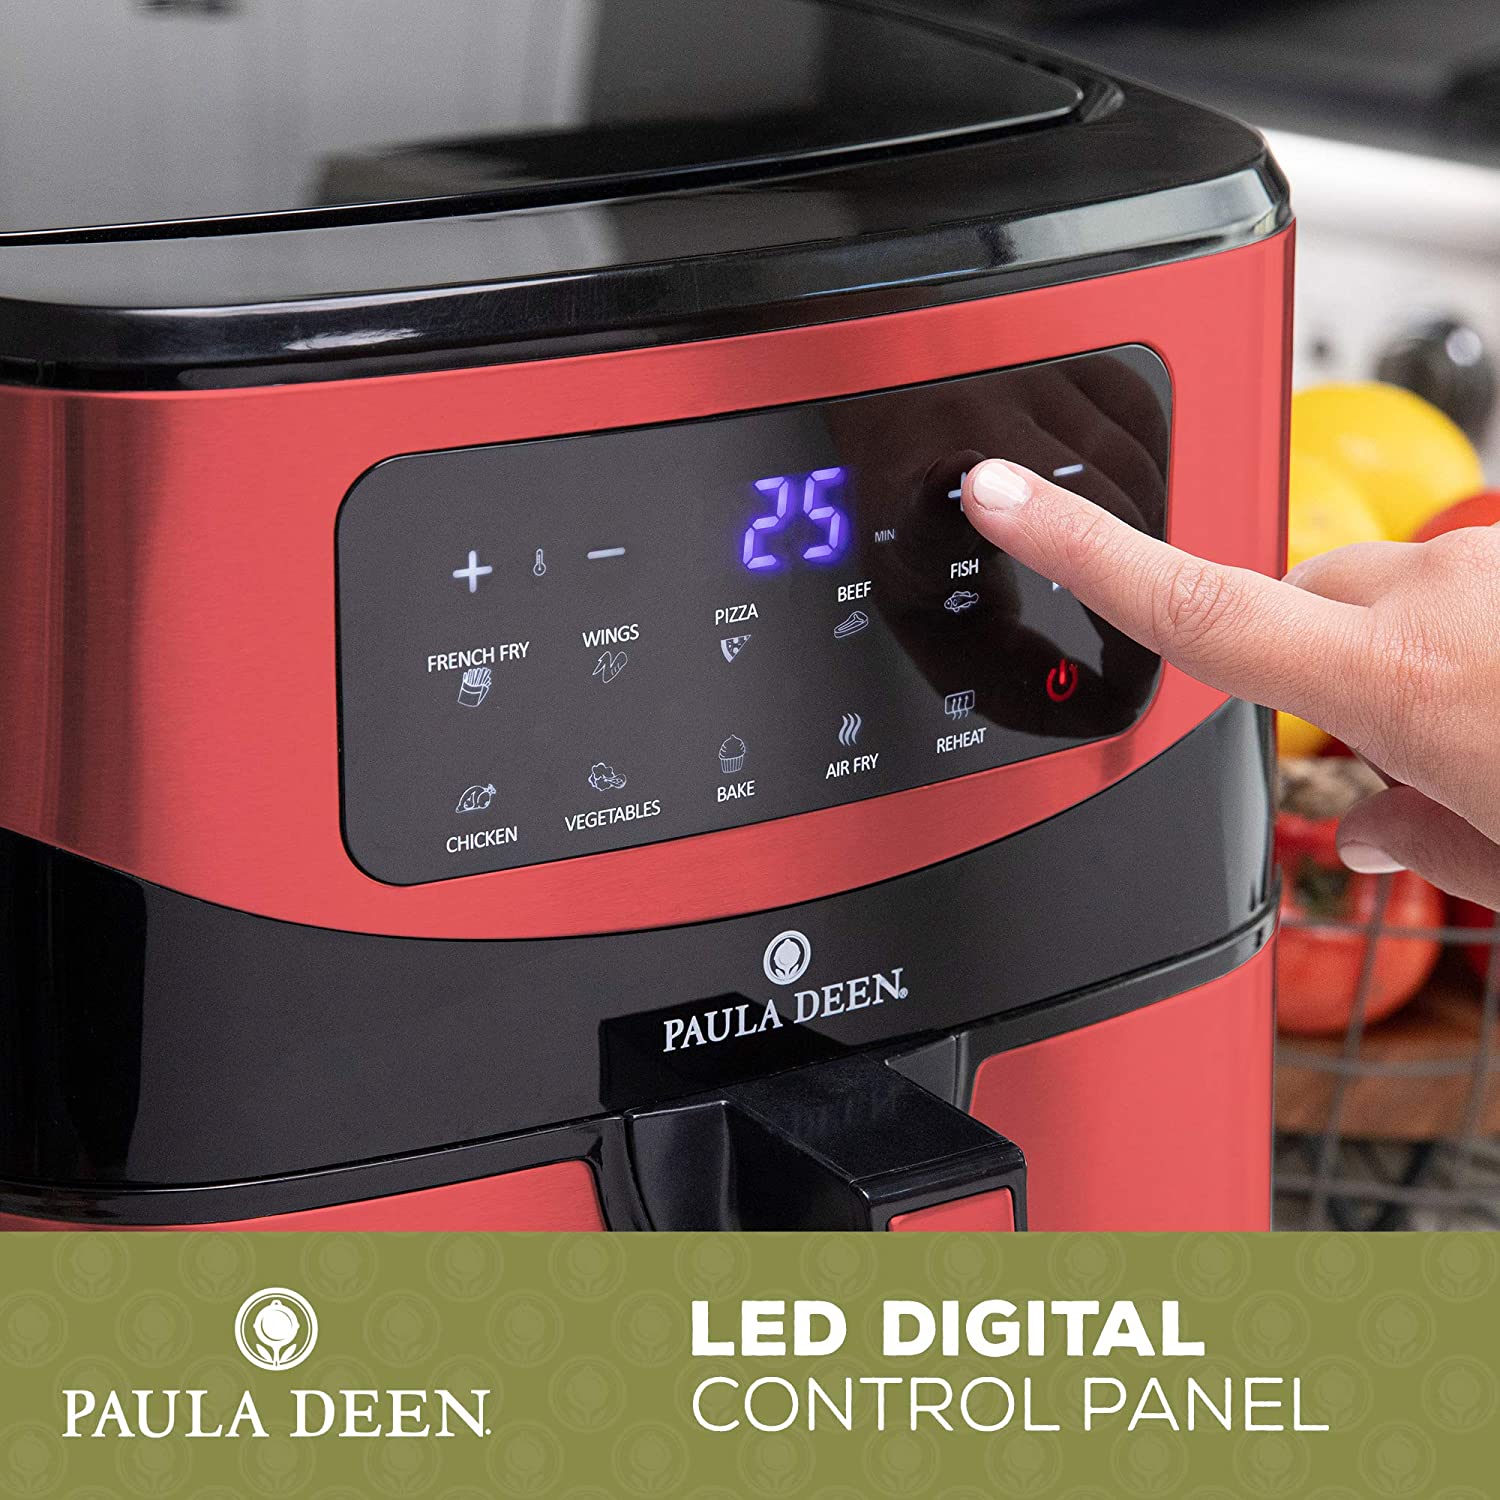 Paula Deen PDKDF579R Stainless Steel 10 QT 1700 Watts Digital LED Display Air Fryer, Red Stainless